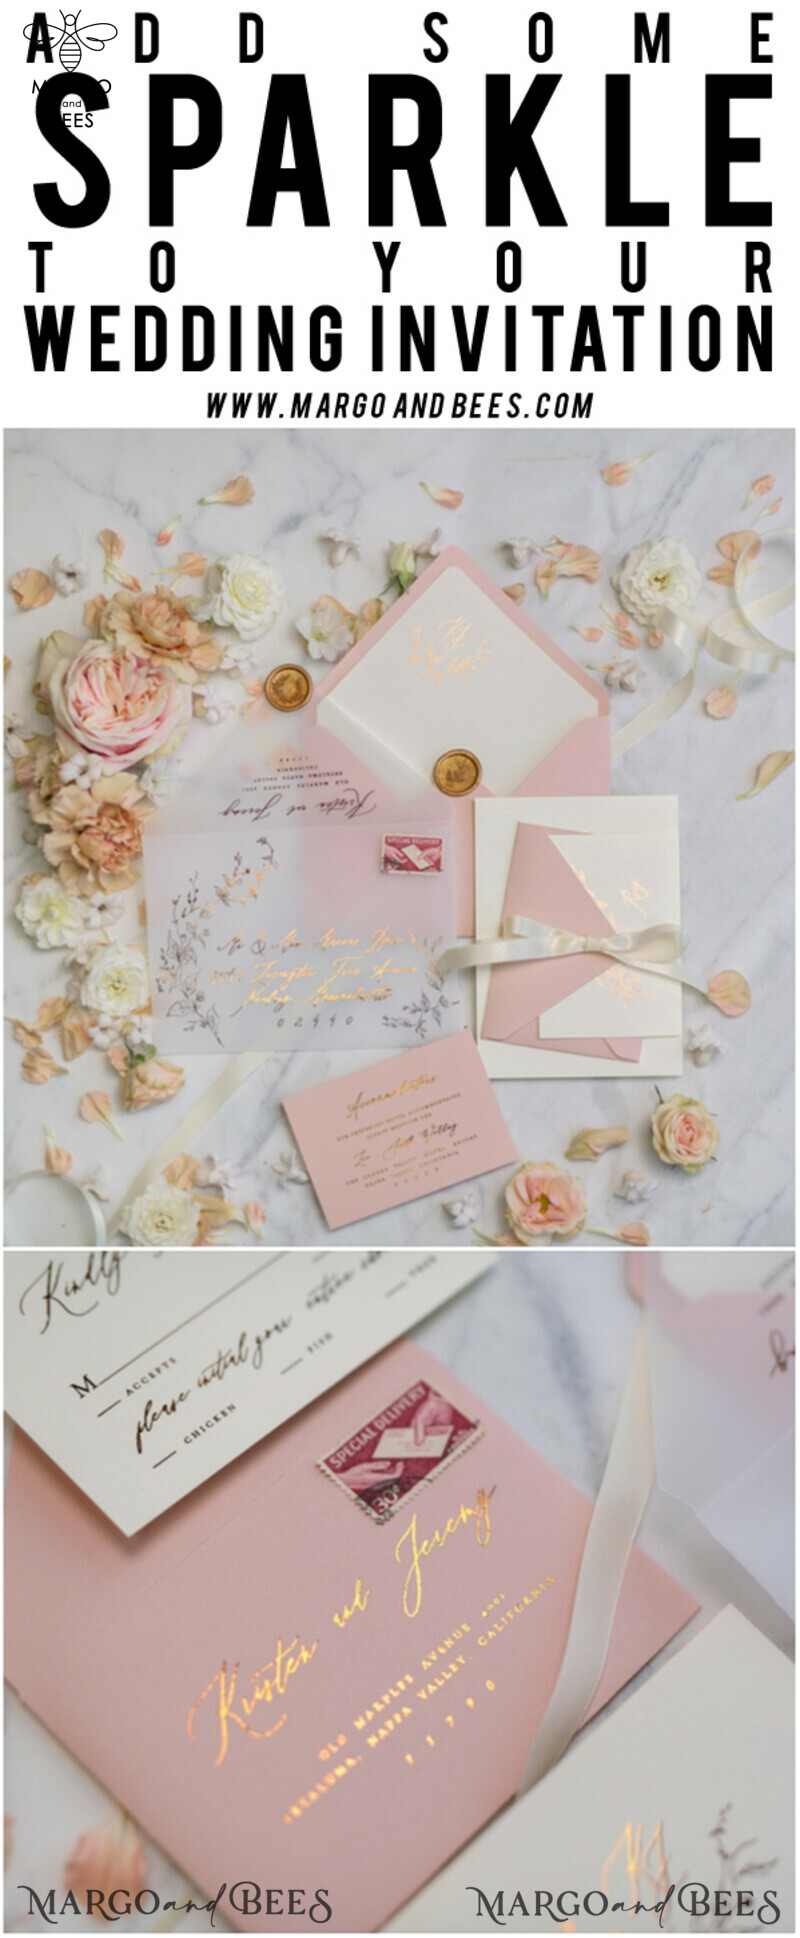 Exquisite Blush Pink and Gold Foil Wedding Invitations: A Unique Vellum Suite for an Elegant Celebration-38